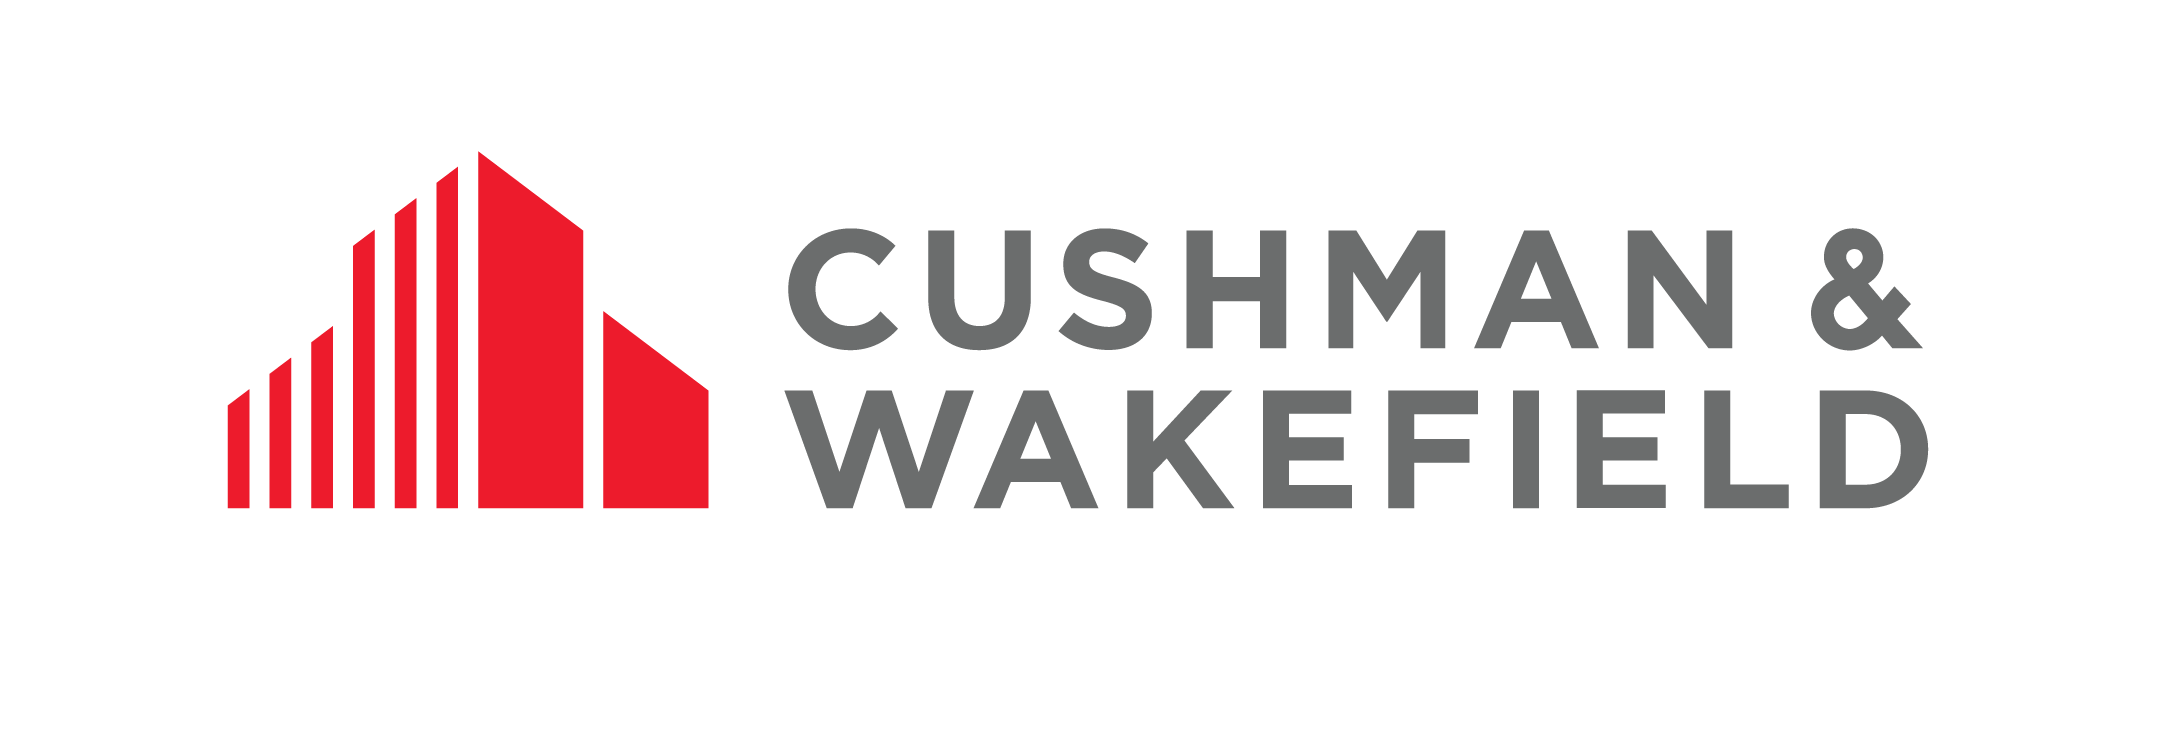 Cushman and Wakefield, Inc.